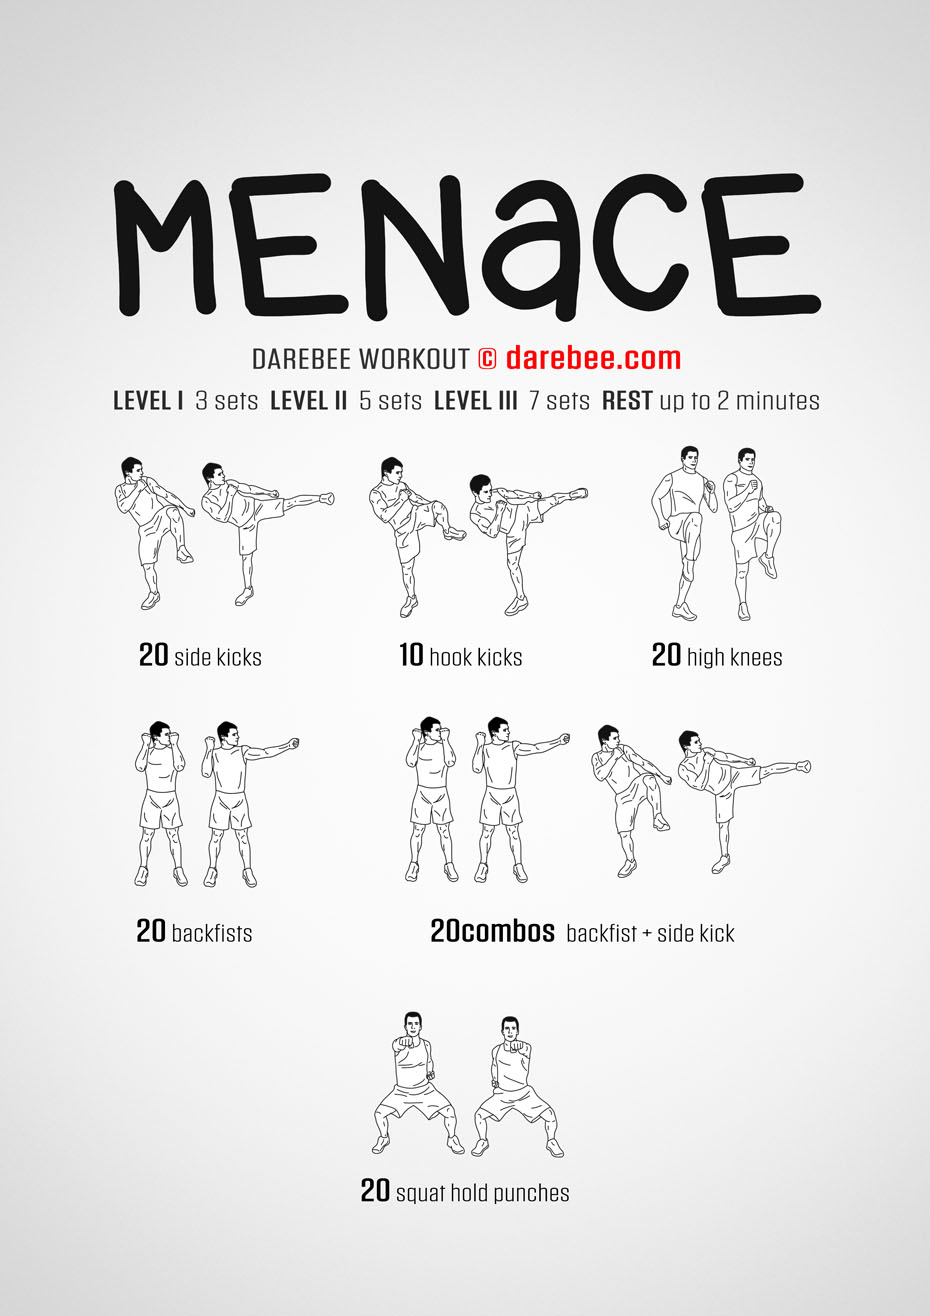 Menace Workout